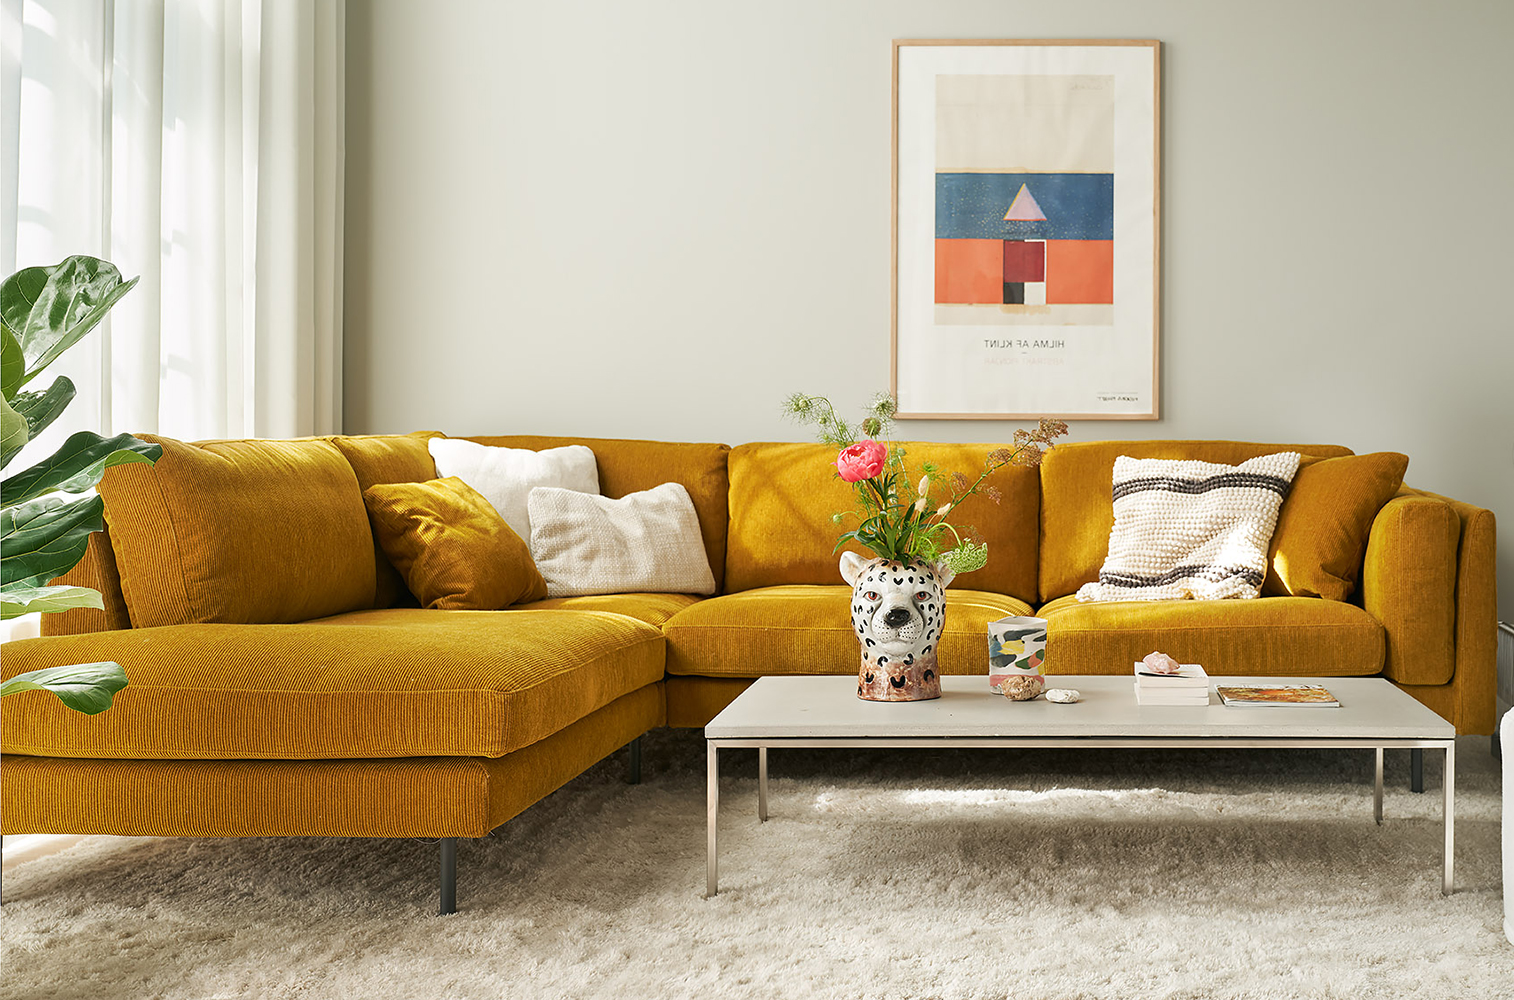 Modern Sofa Designs – Interior Design, Design News and Architecture Trends